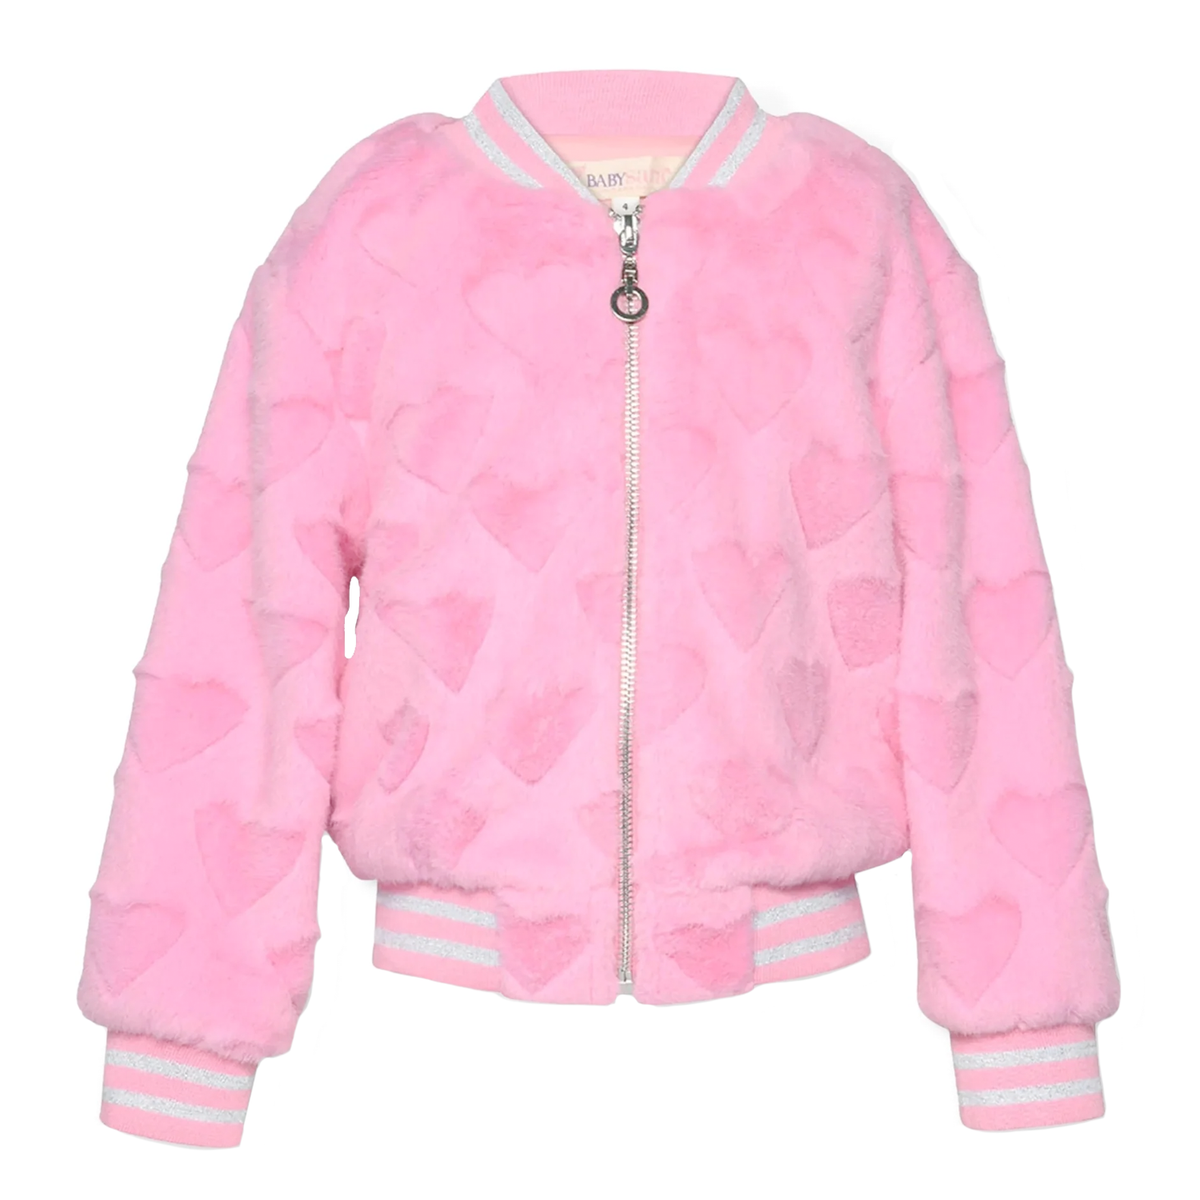 Fur Hearts Pink Bomber Jacket, Hannah Banana - RSVP Style